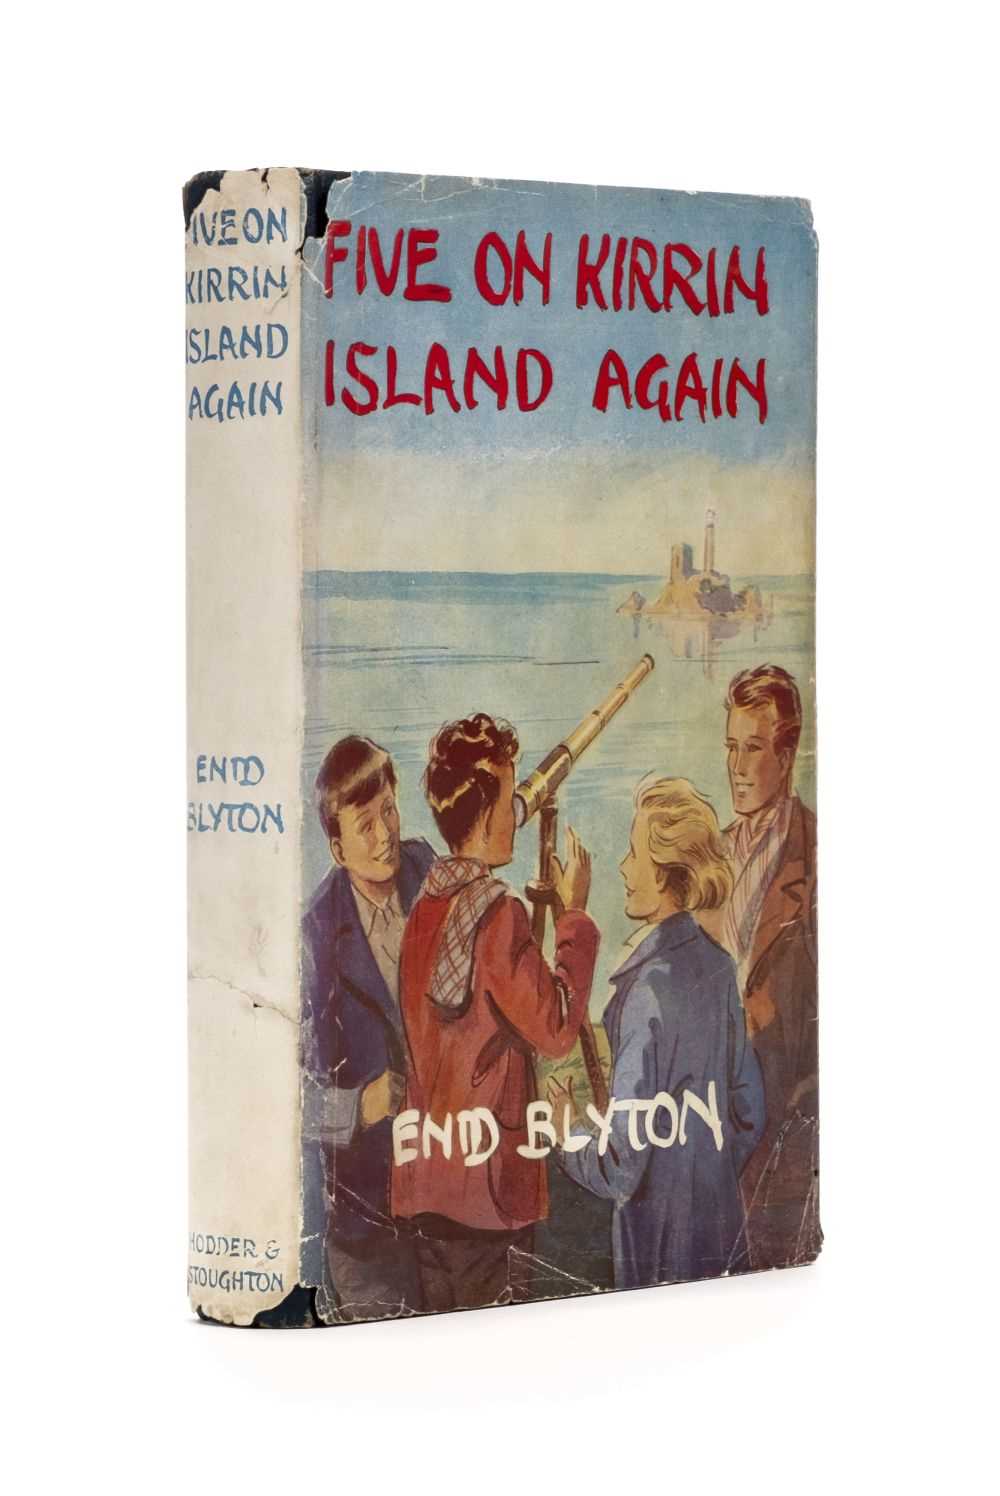 Lot 658 - Blyton (Enid). Five on Kirrin Island Again, 1st edition, Hodder & Stoughton, 1947